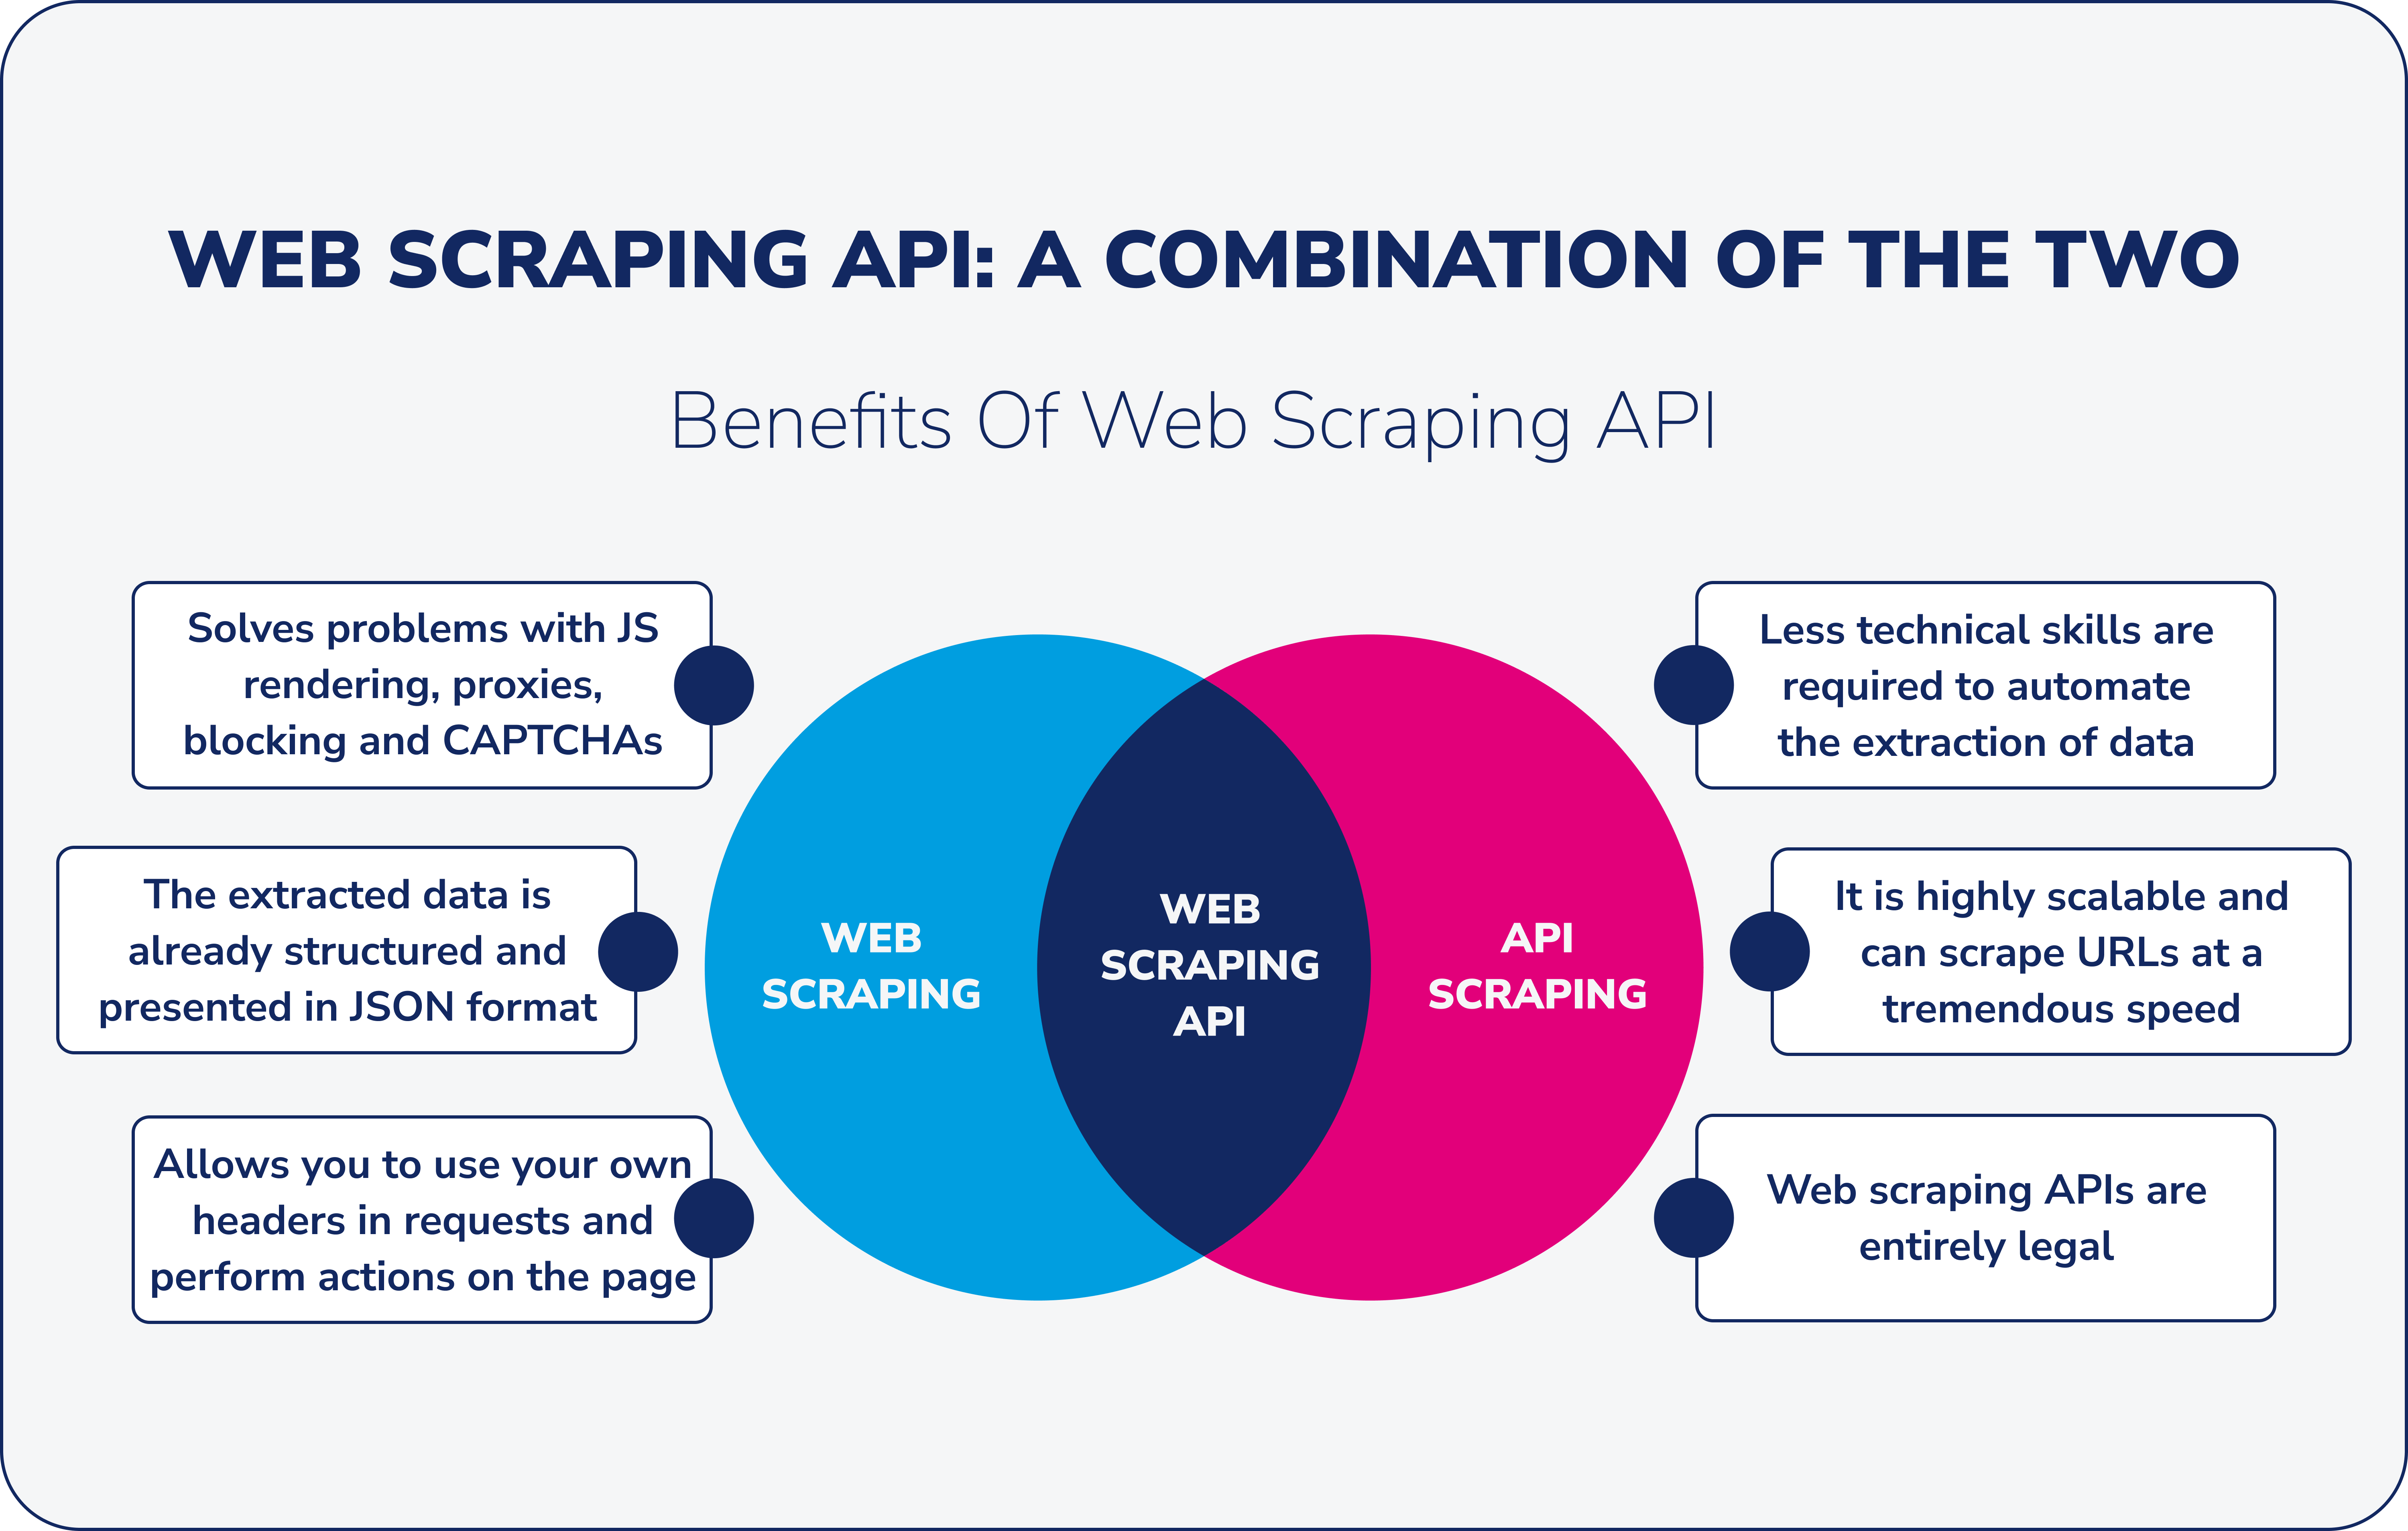 Benefits of Web Scraping API